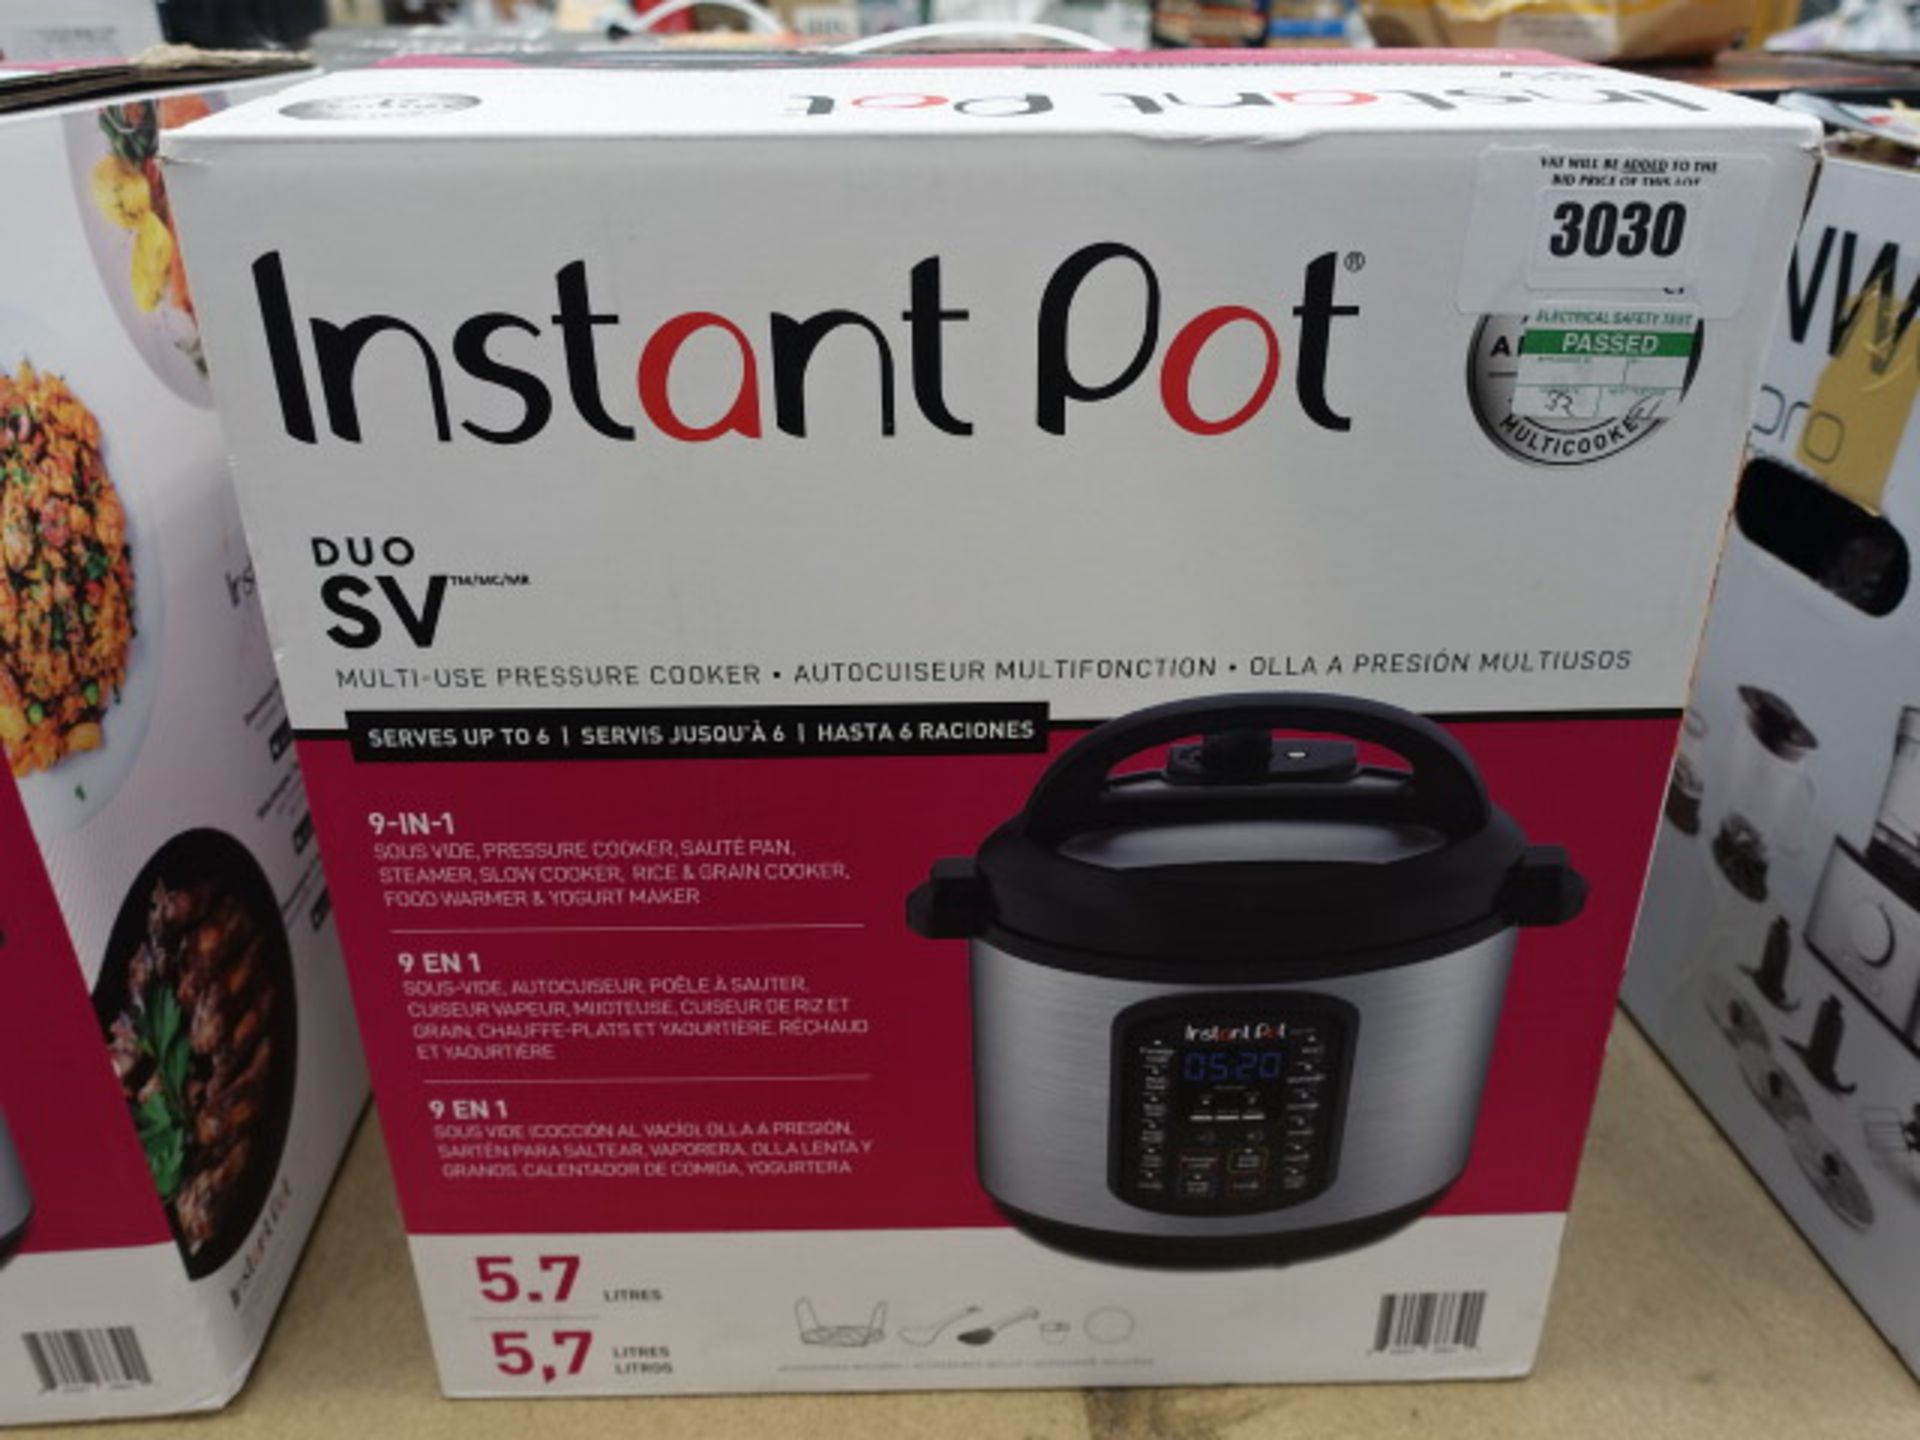 Boxed Instant Pot multi use pressure cooker